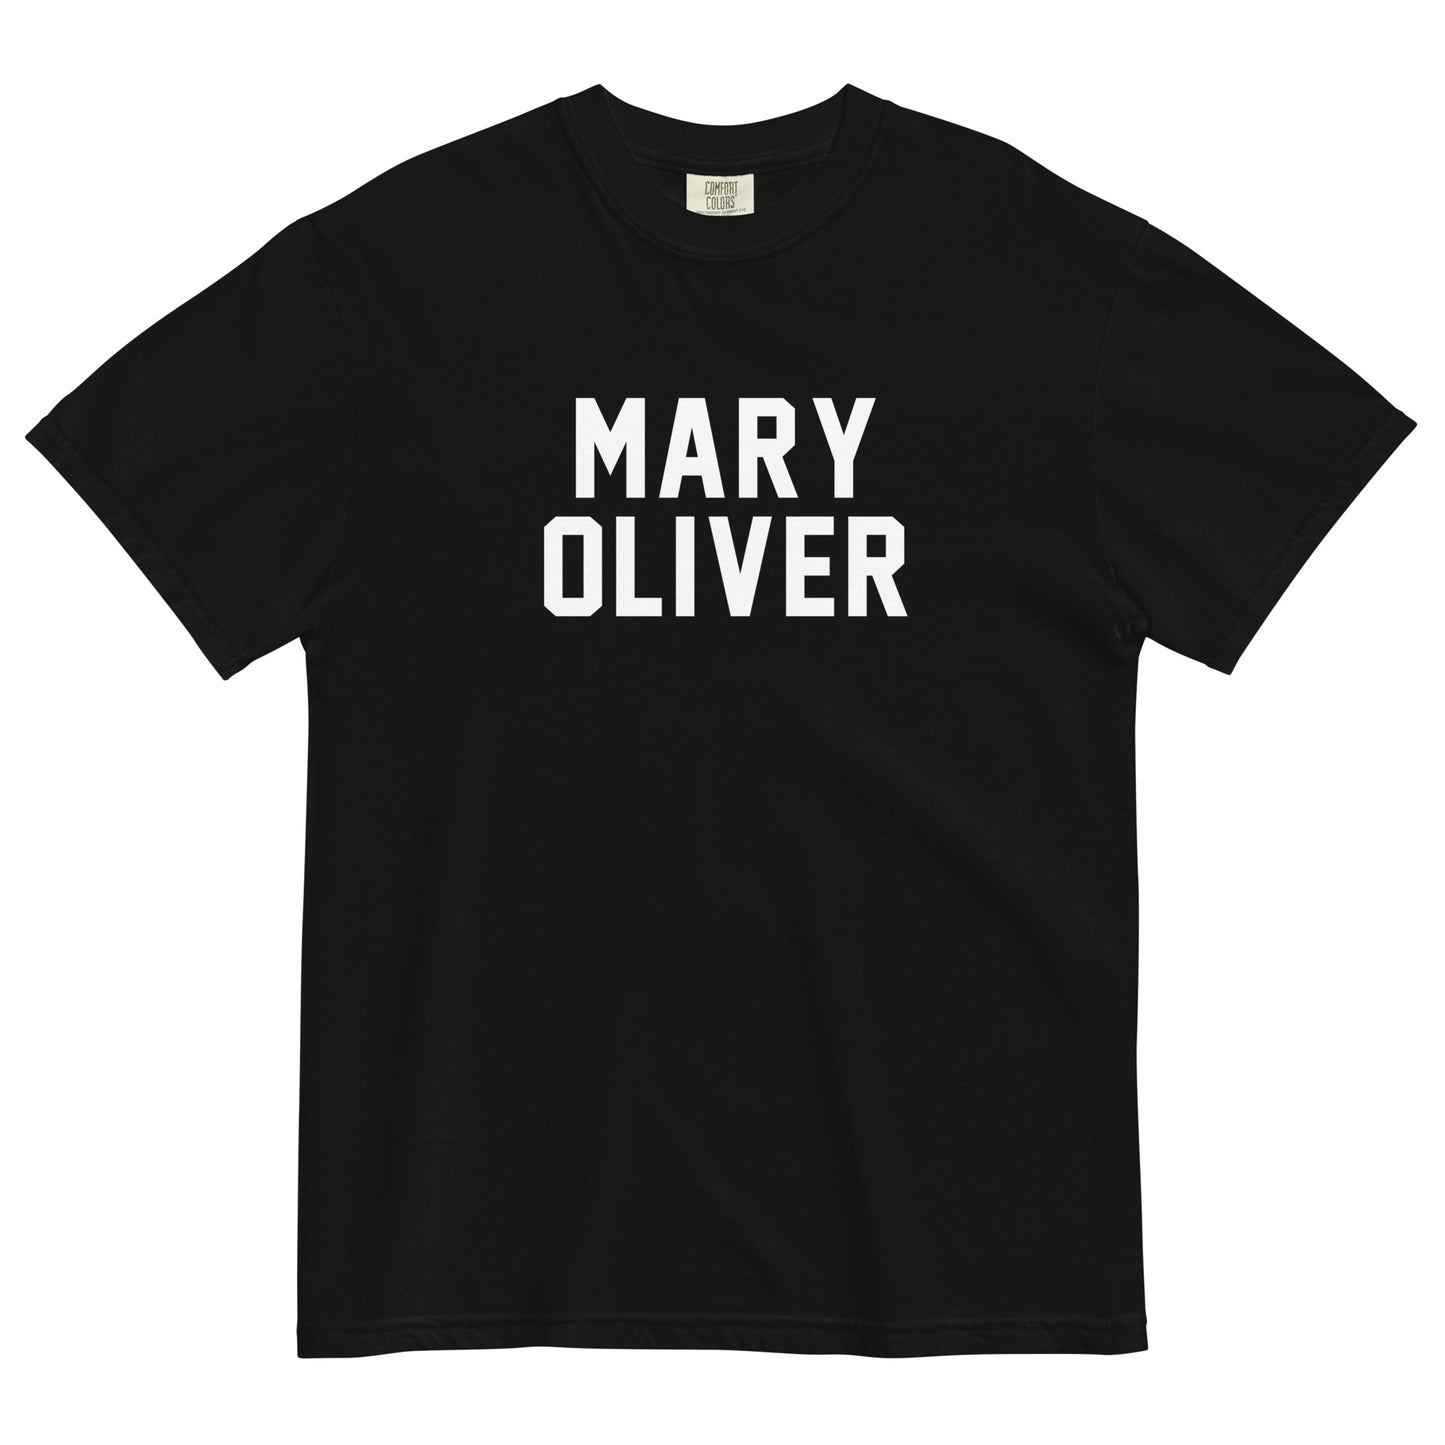 MARY OLIVER